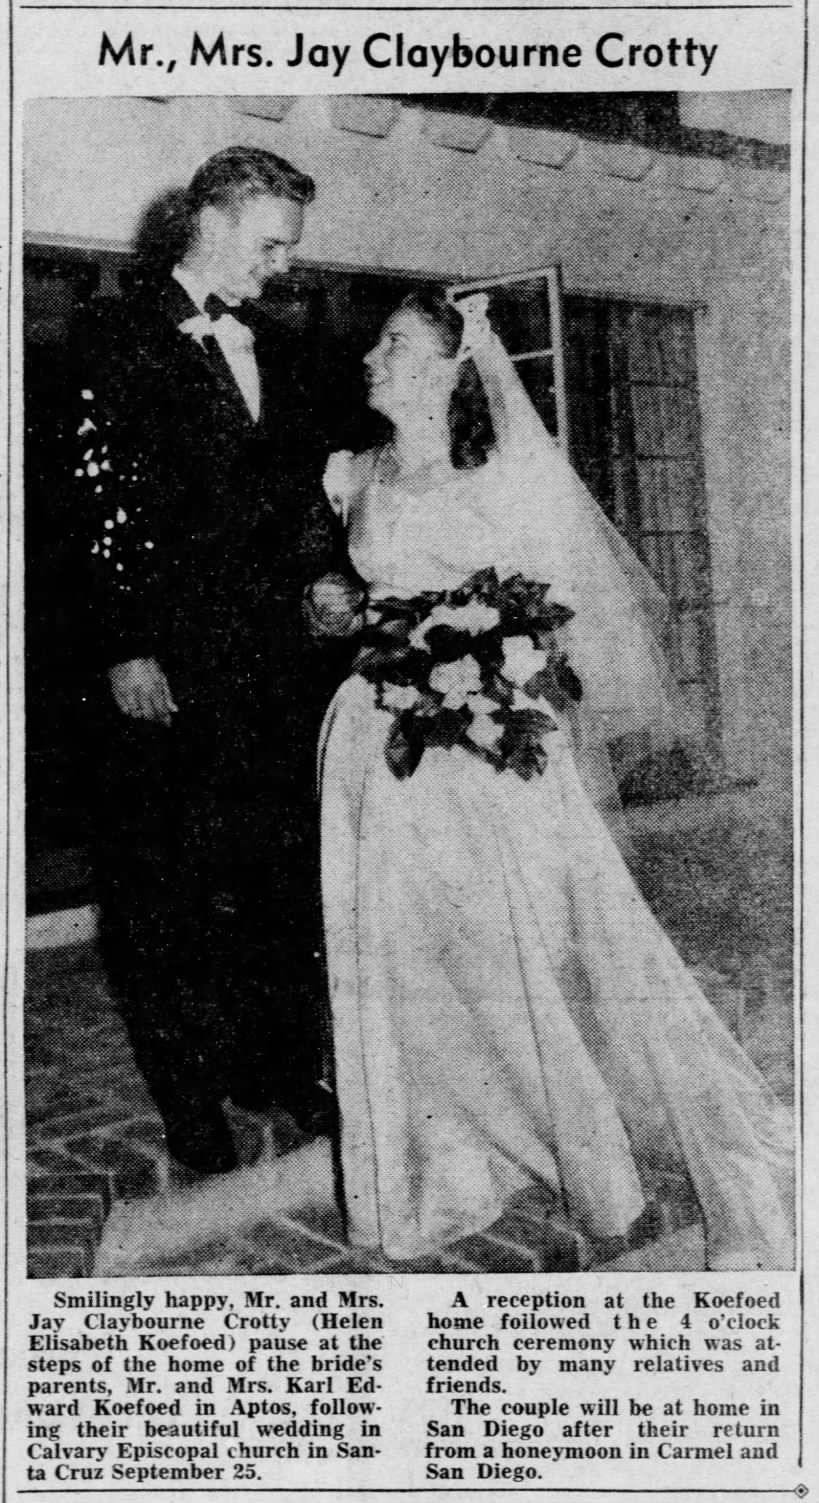 Mr. and Mrs. Jay c. Crotty wedding photo